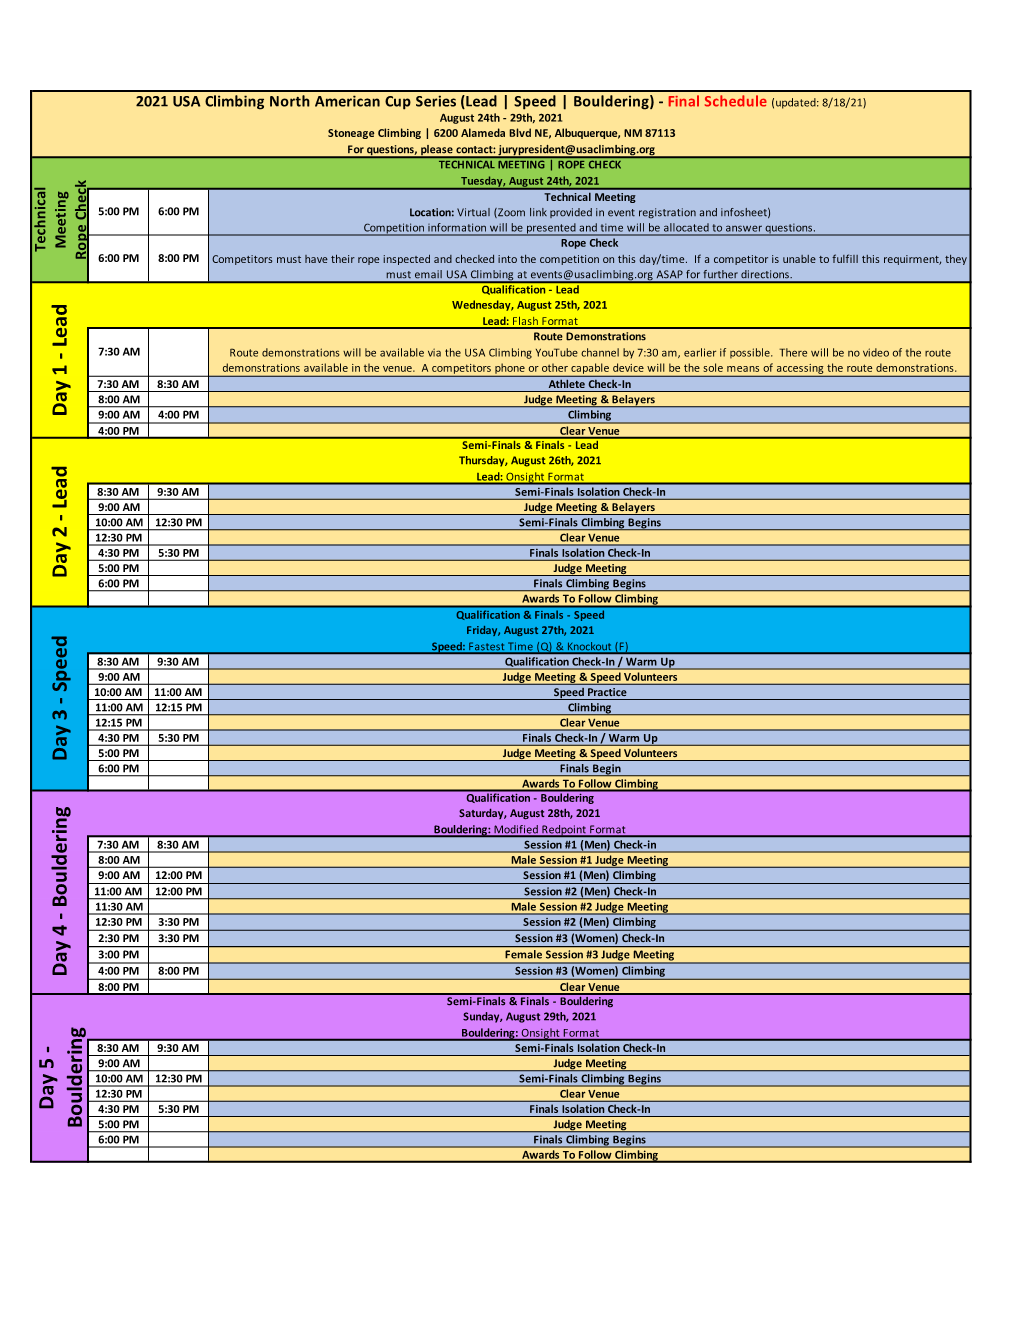 Final Schedule Timing Grid 20-21 NACS B S L